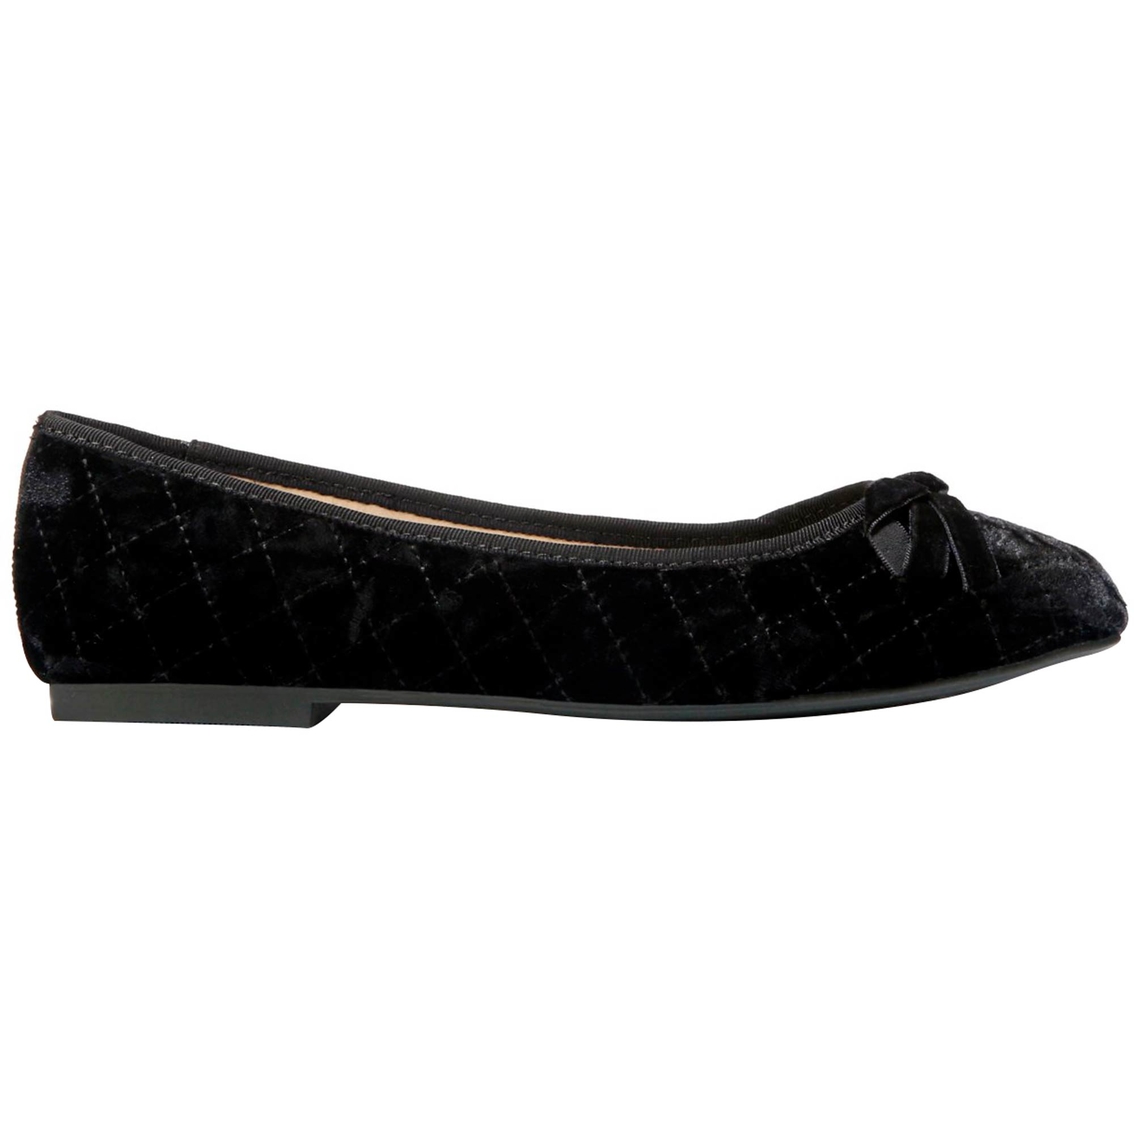 Zigi Soho Taite Quilted Velvet Flats | Flats | Shoes | Shop The Exchange